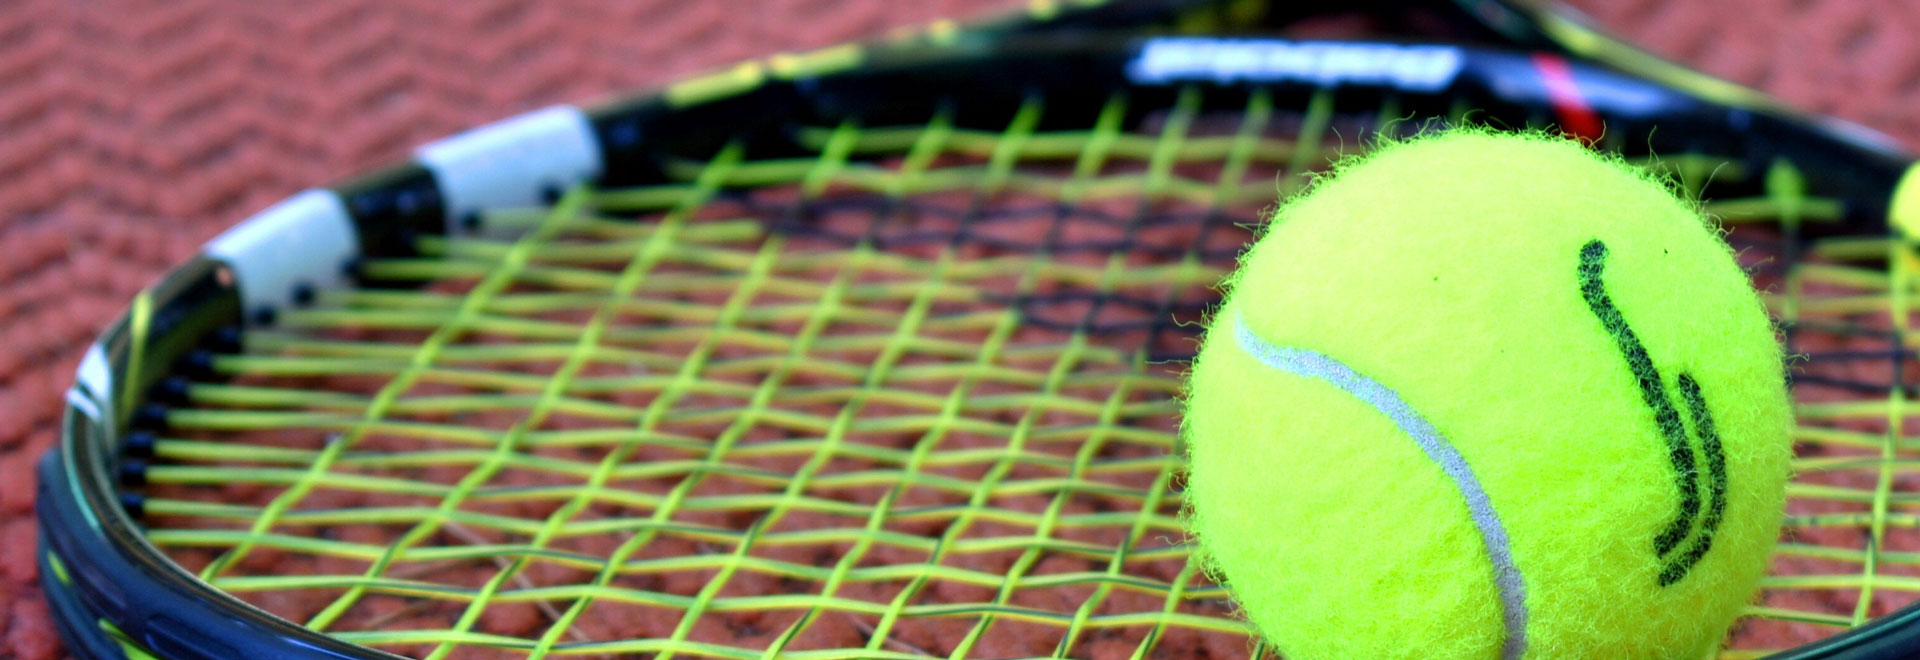 tennis ball on a racket